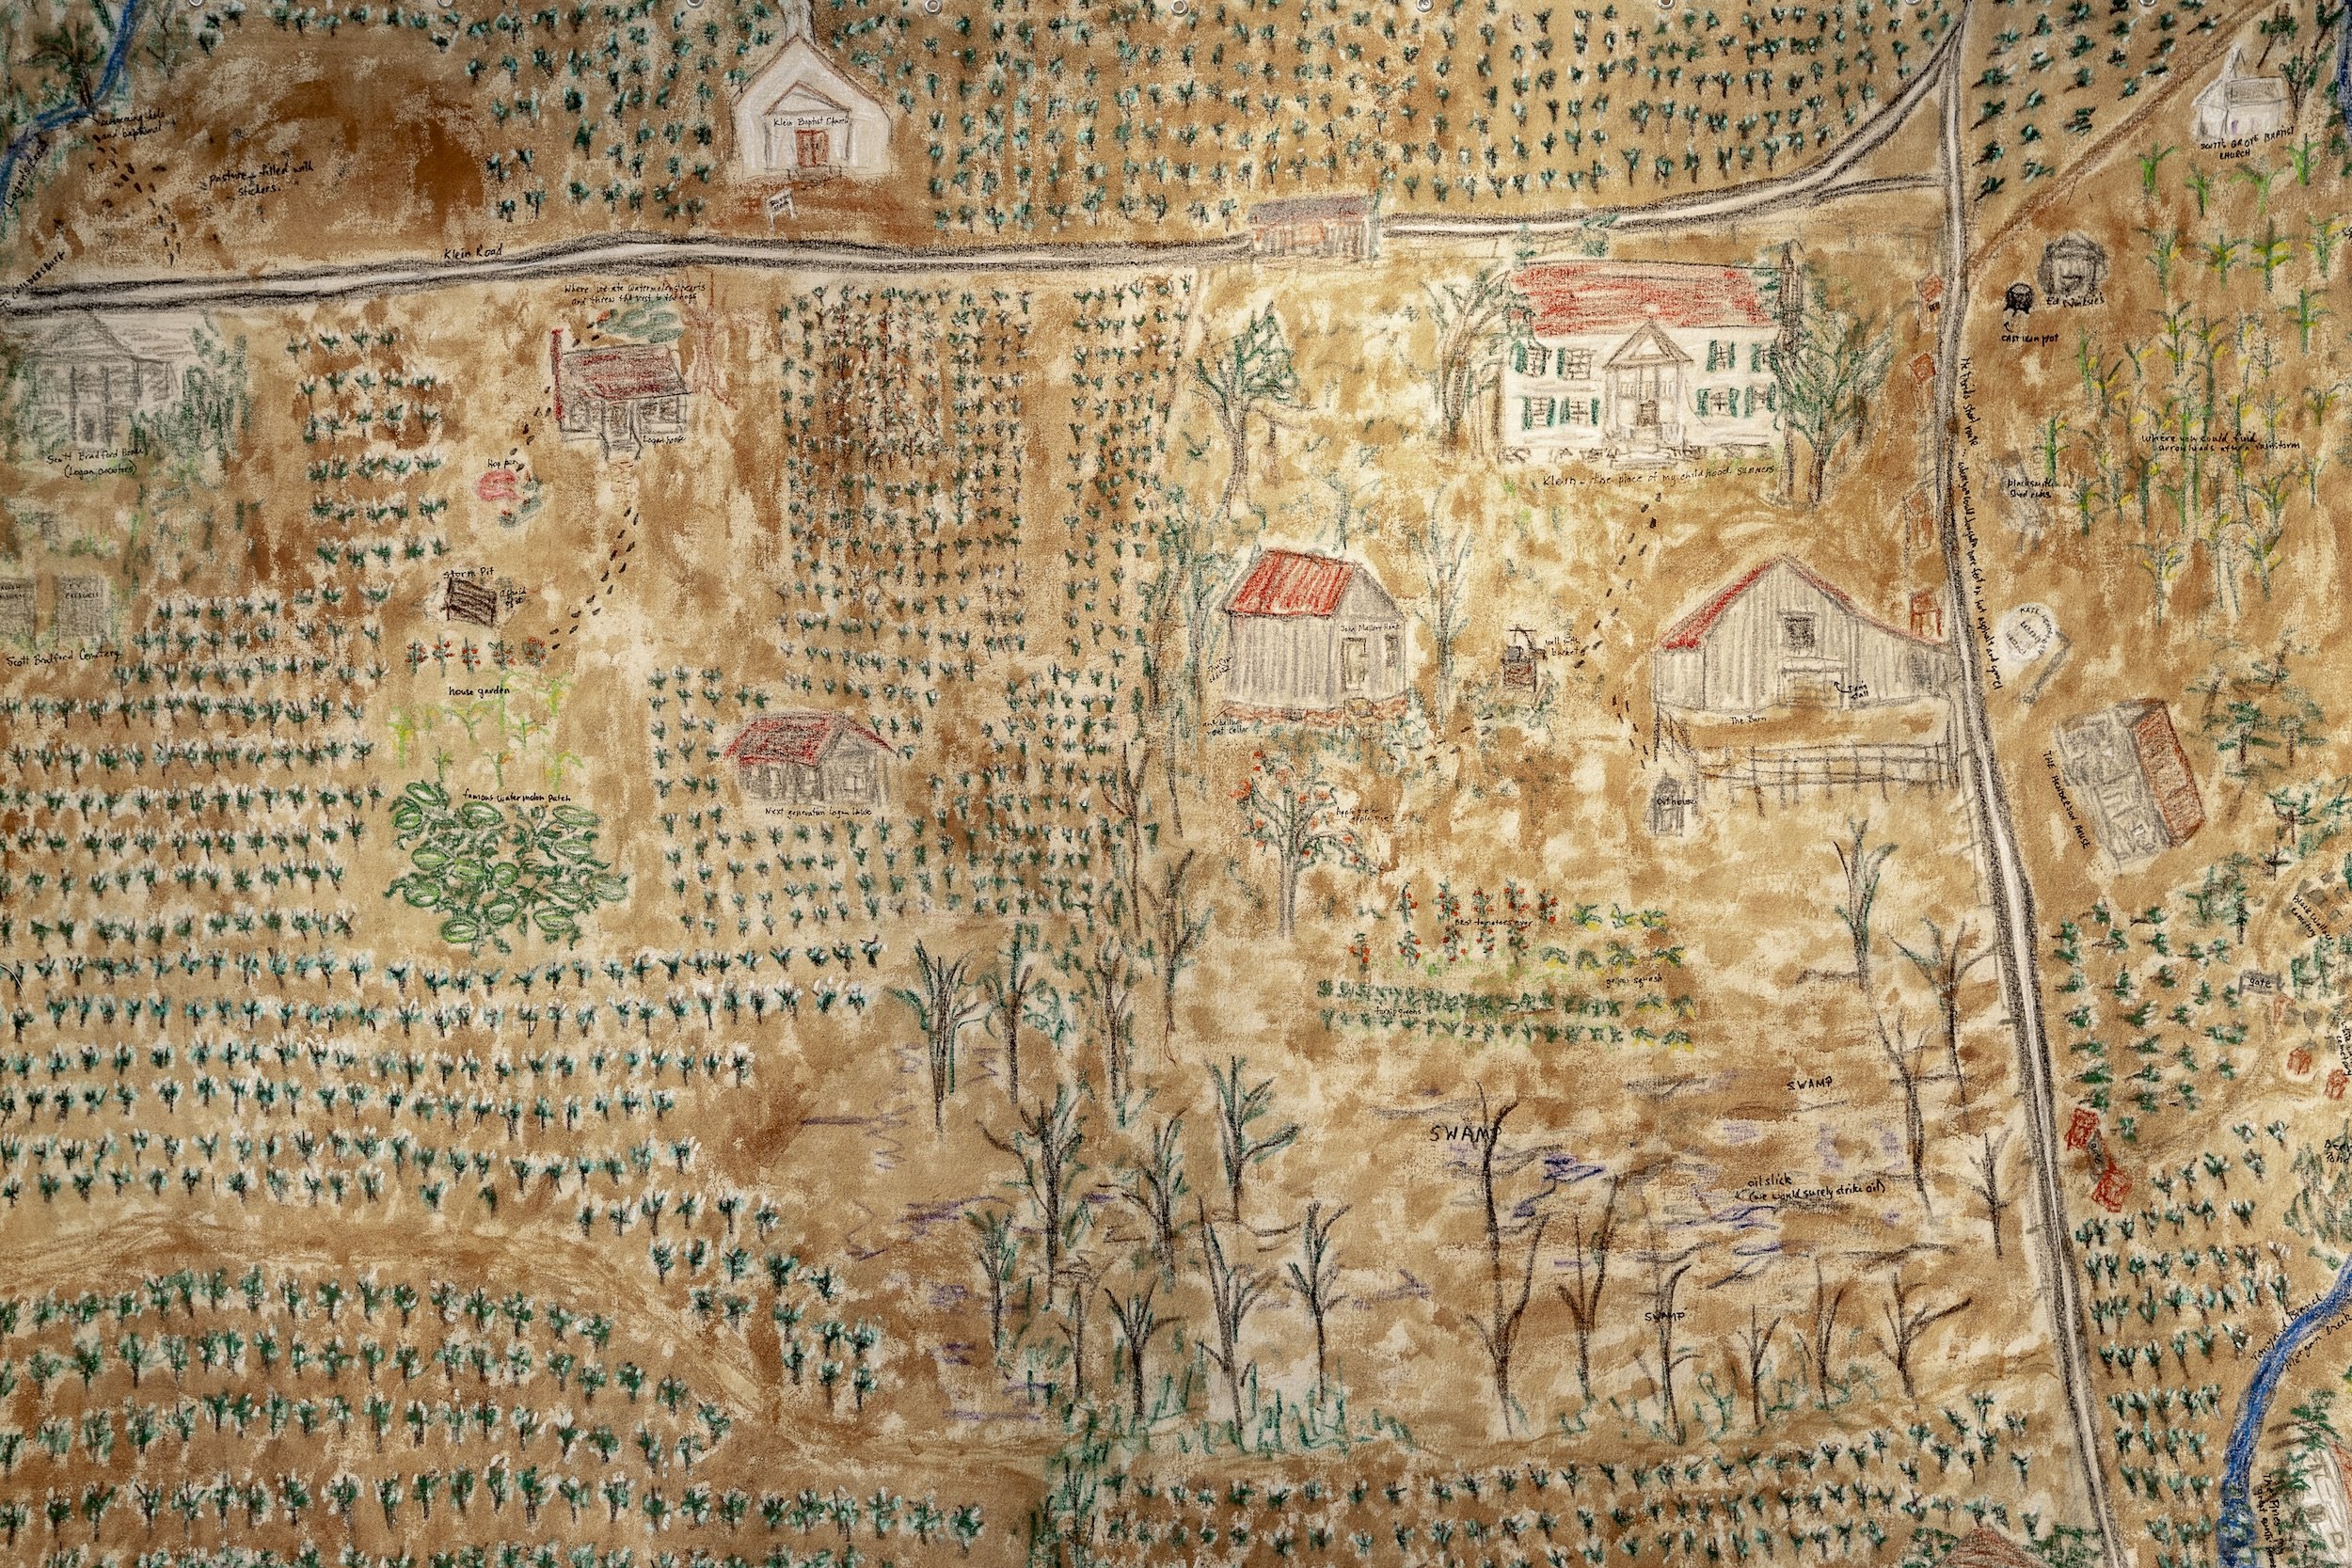 Codex: Map of My Childhood